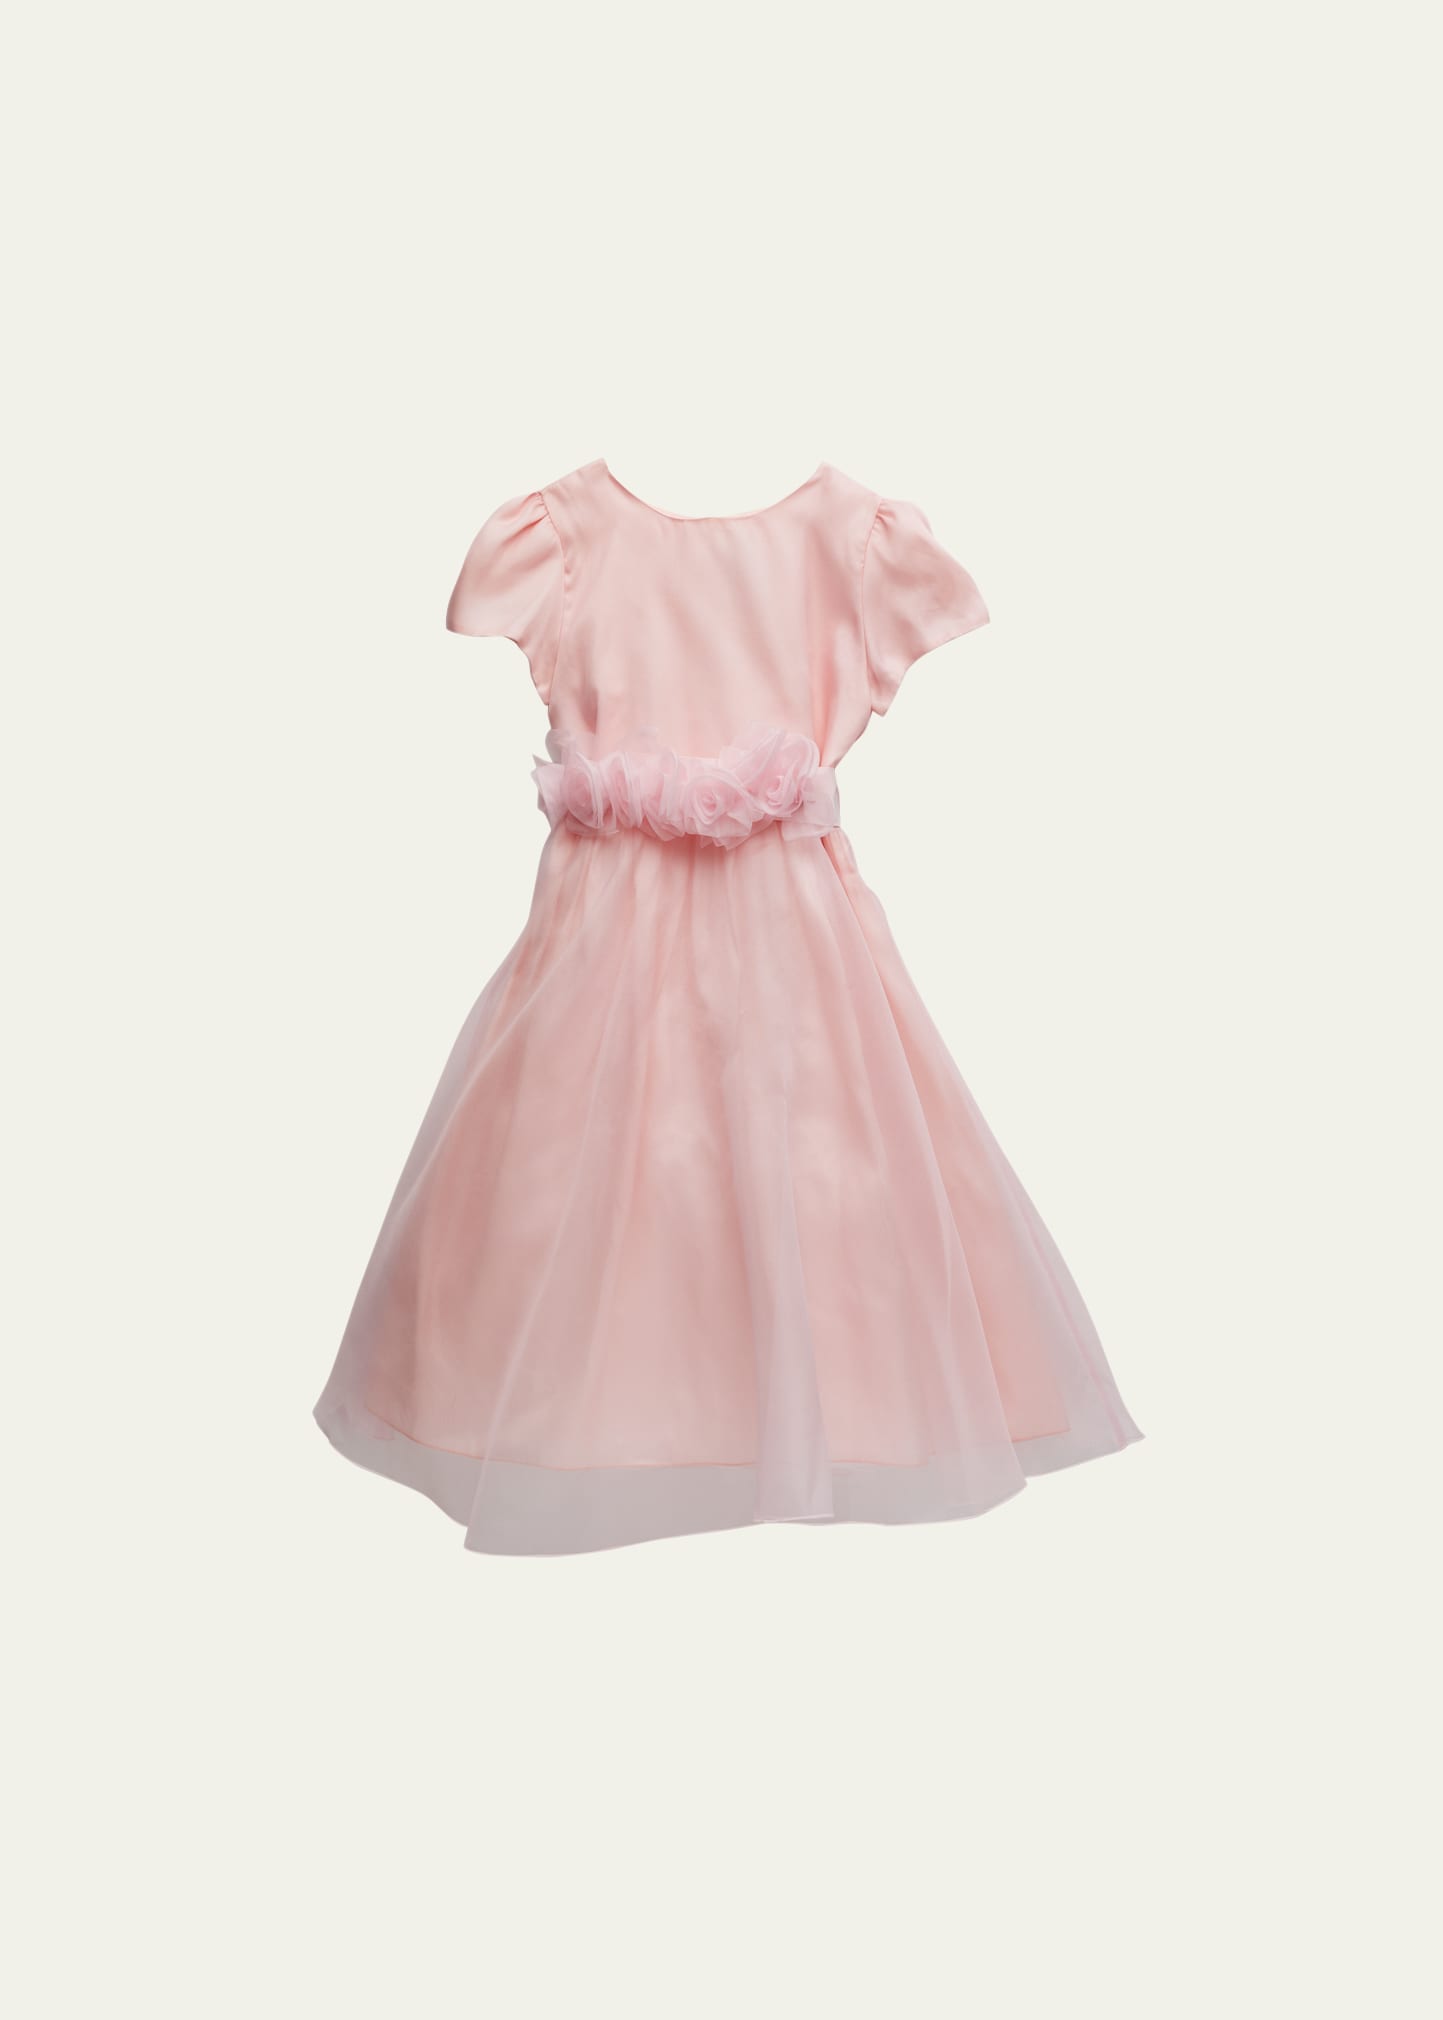 Mariella Ferrari Kids' Girl's Flower Dress With Shine In Pink